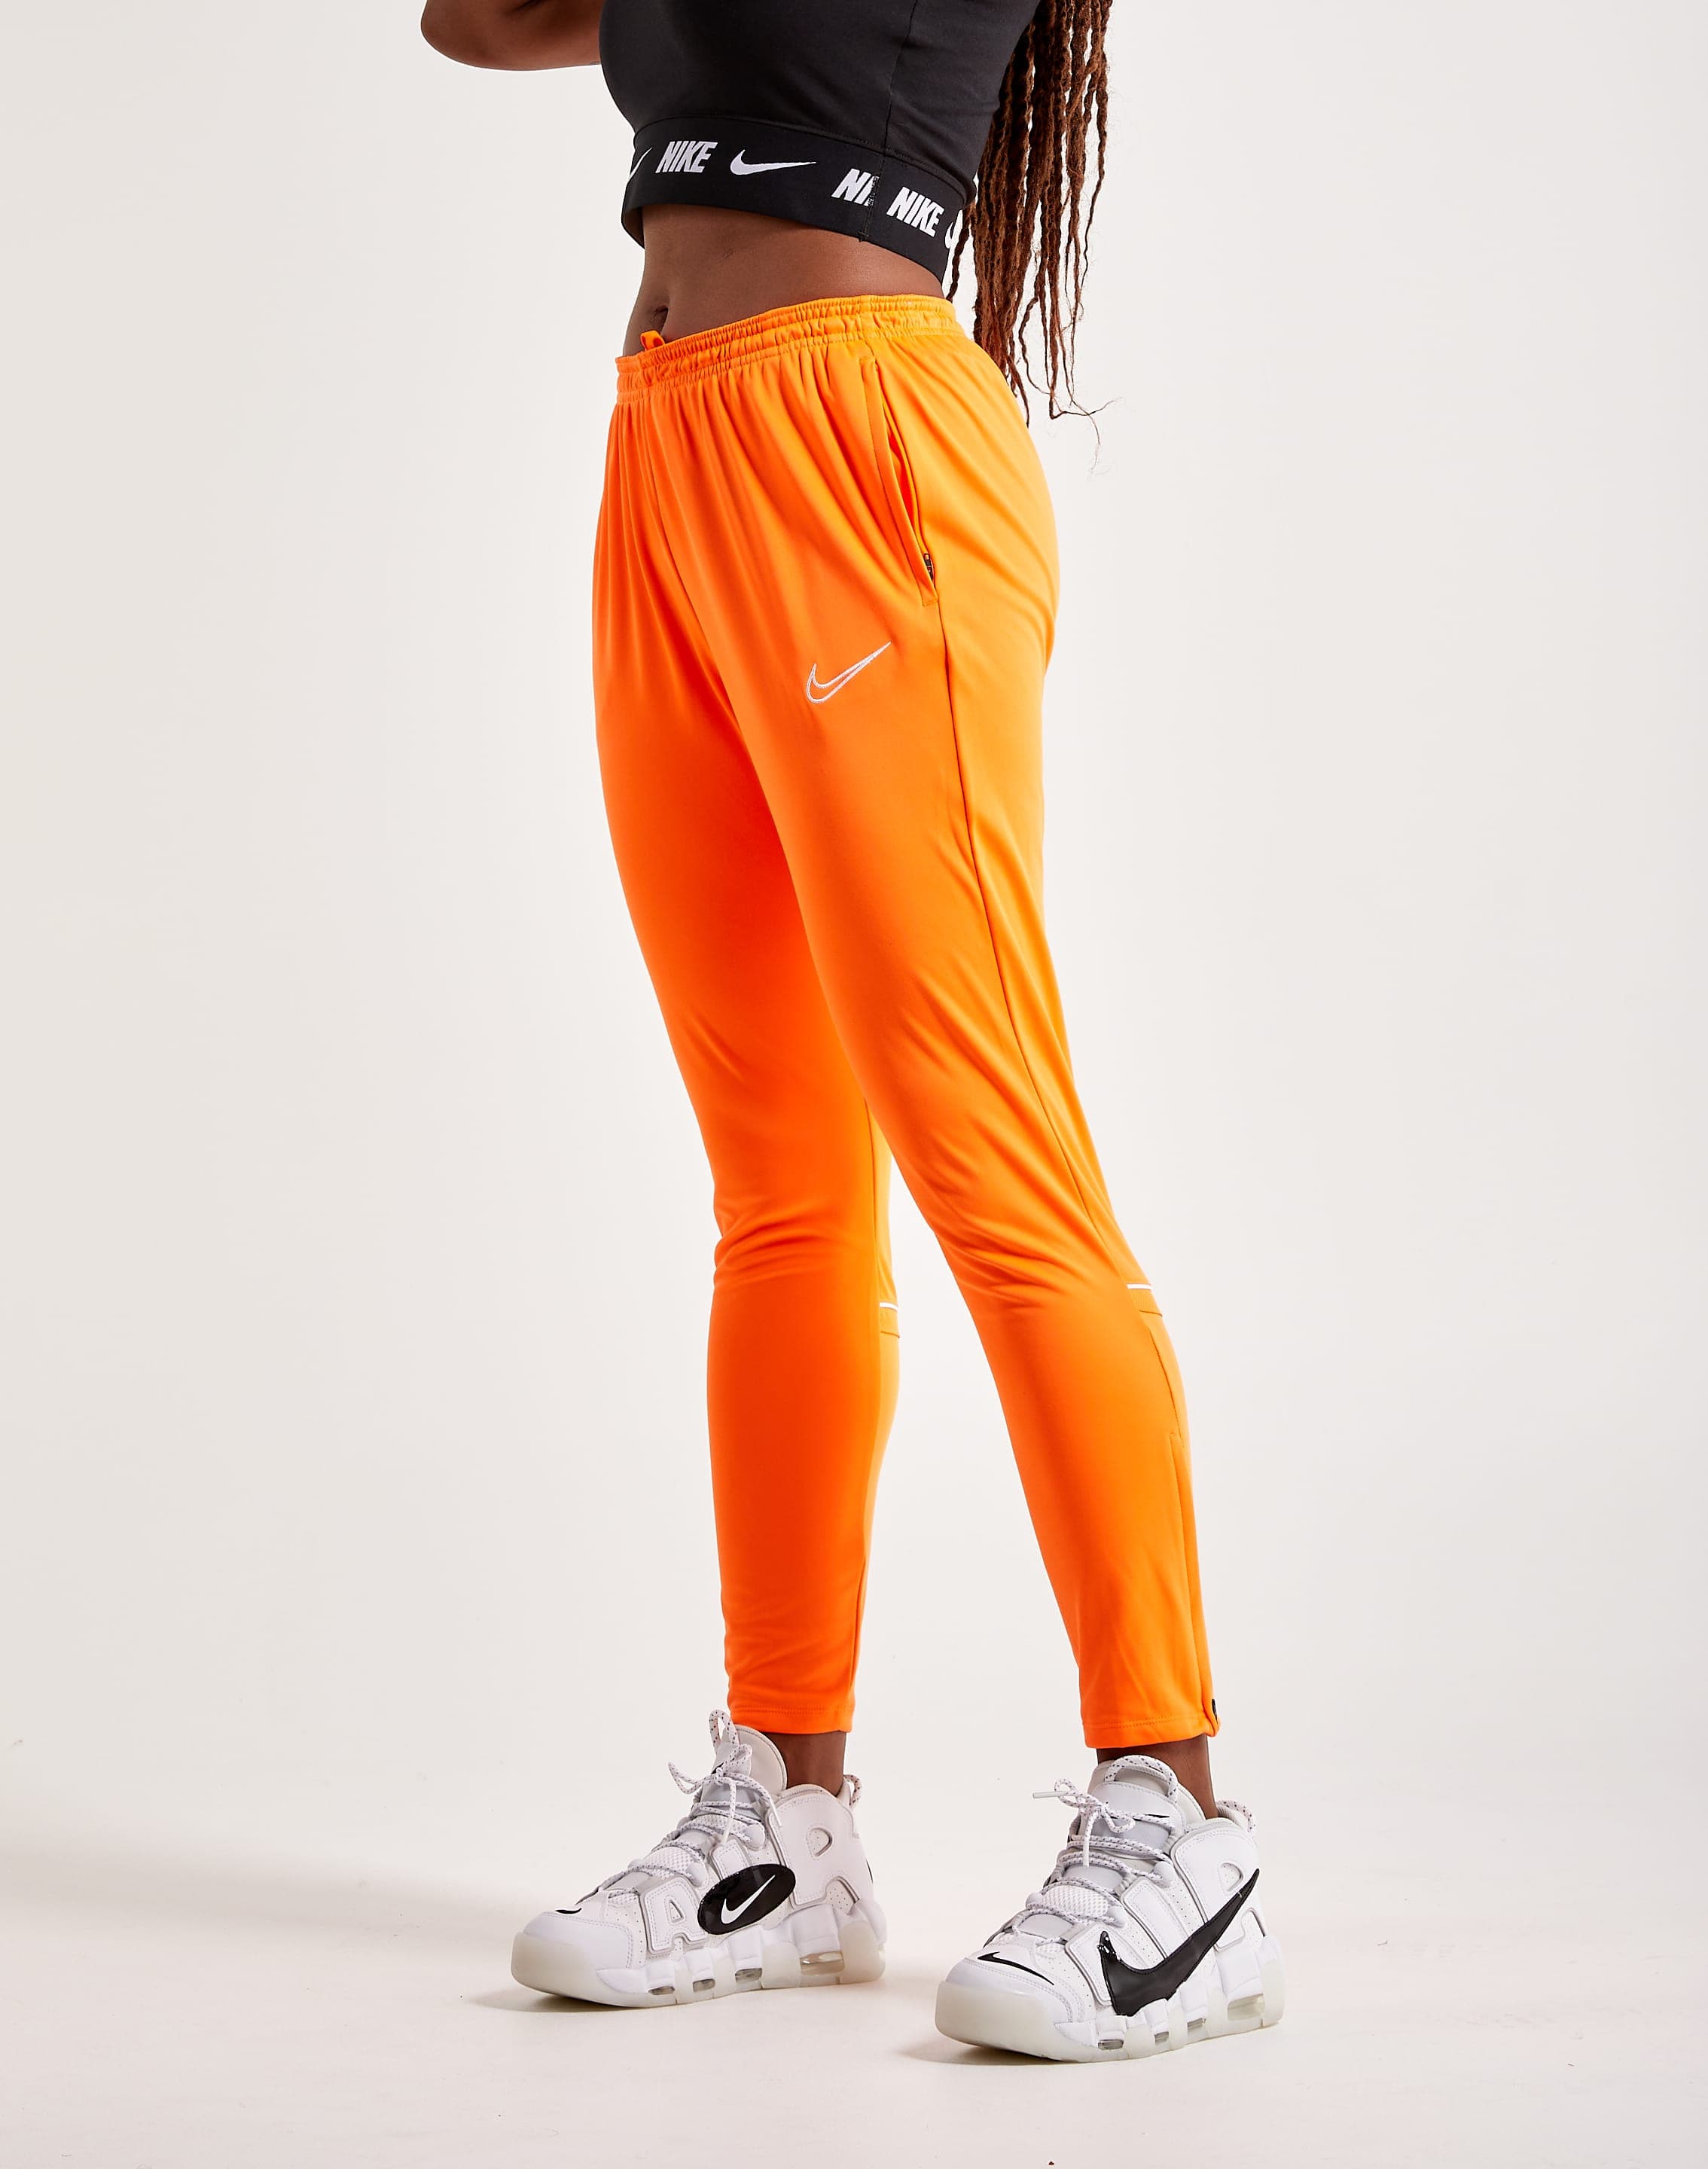 Nike Women's Academy 19 Pant - Nike Training Pants